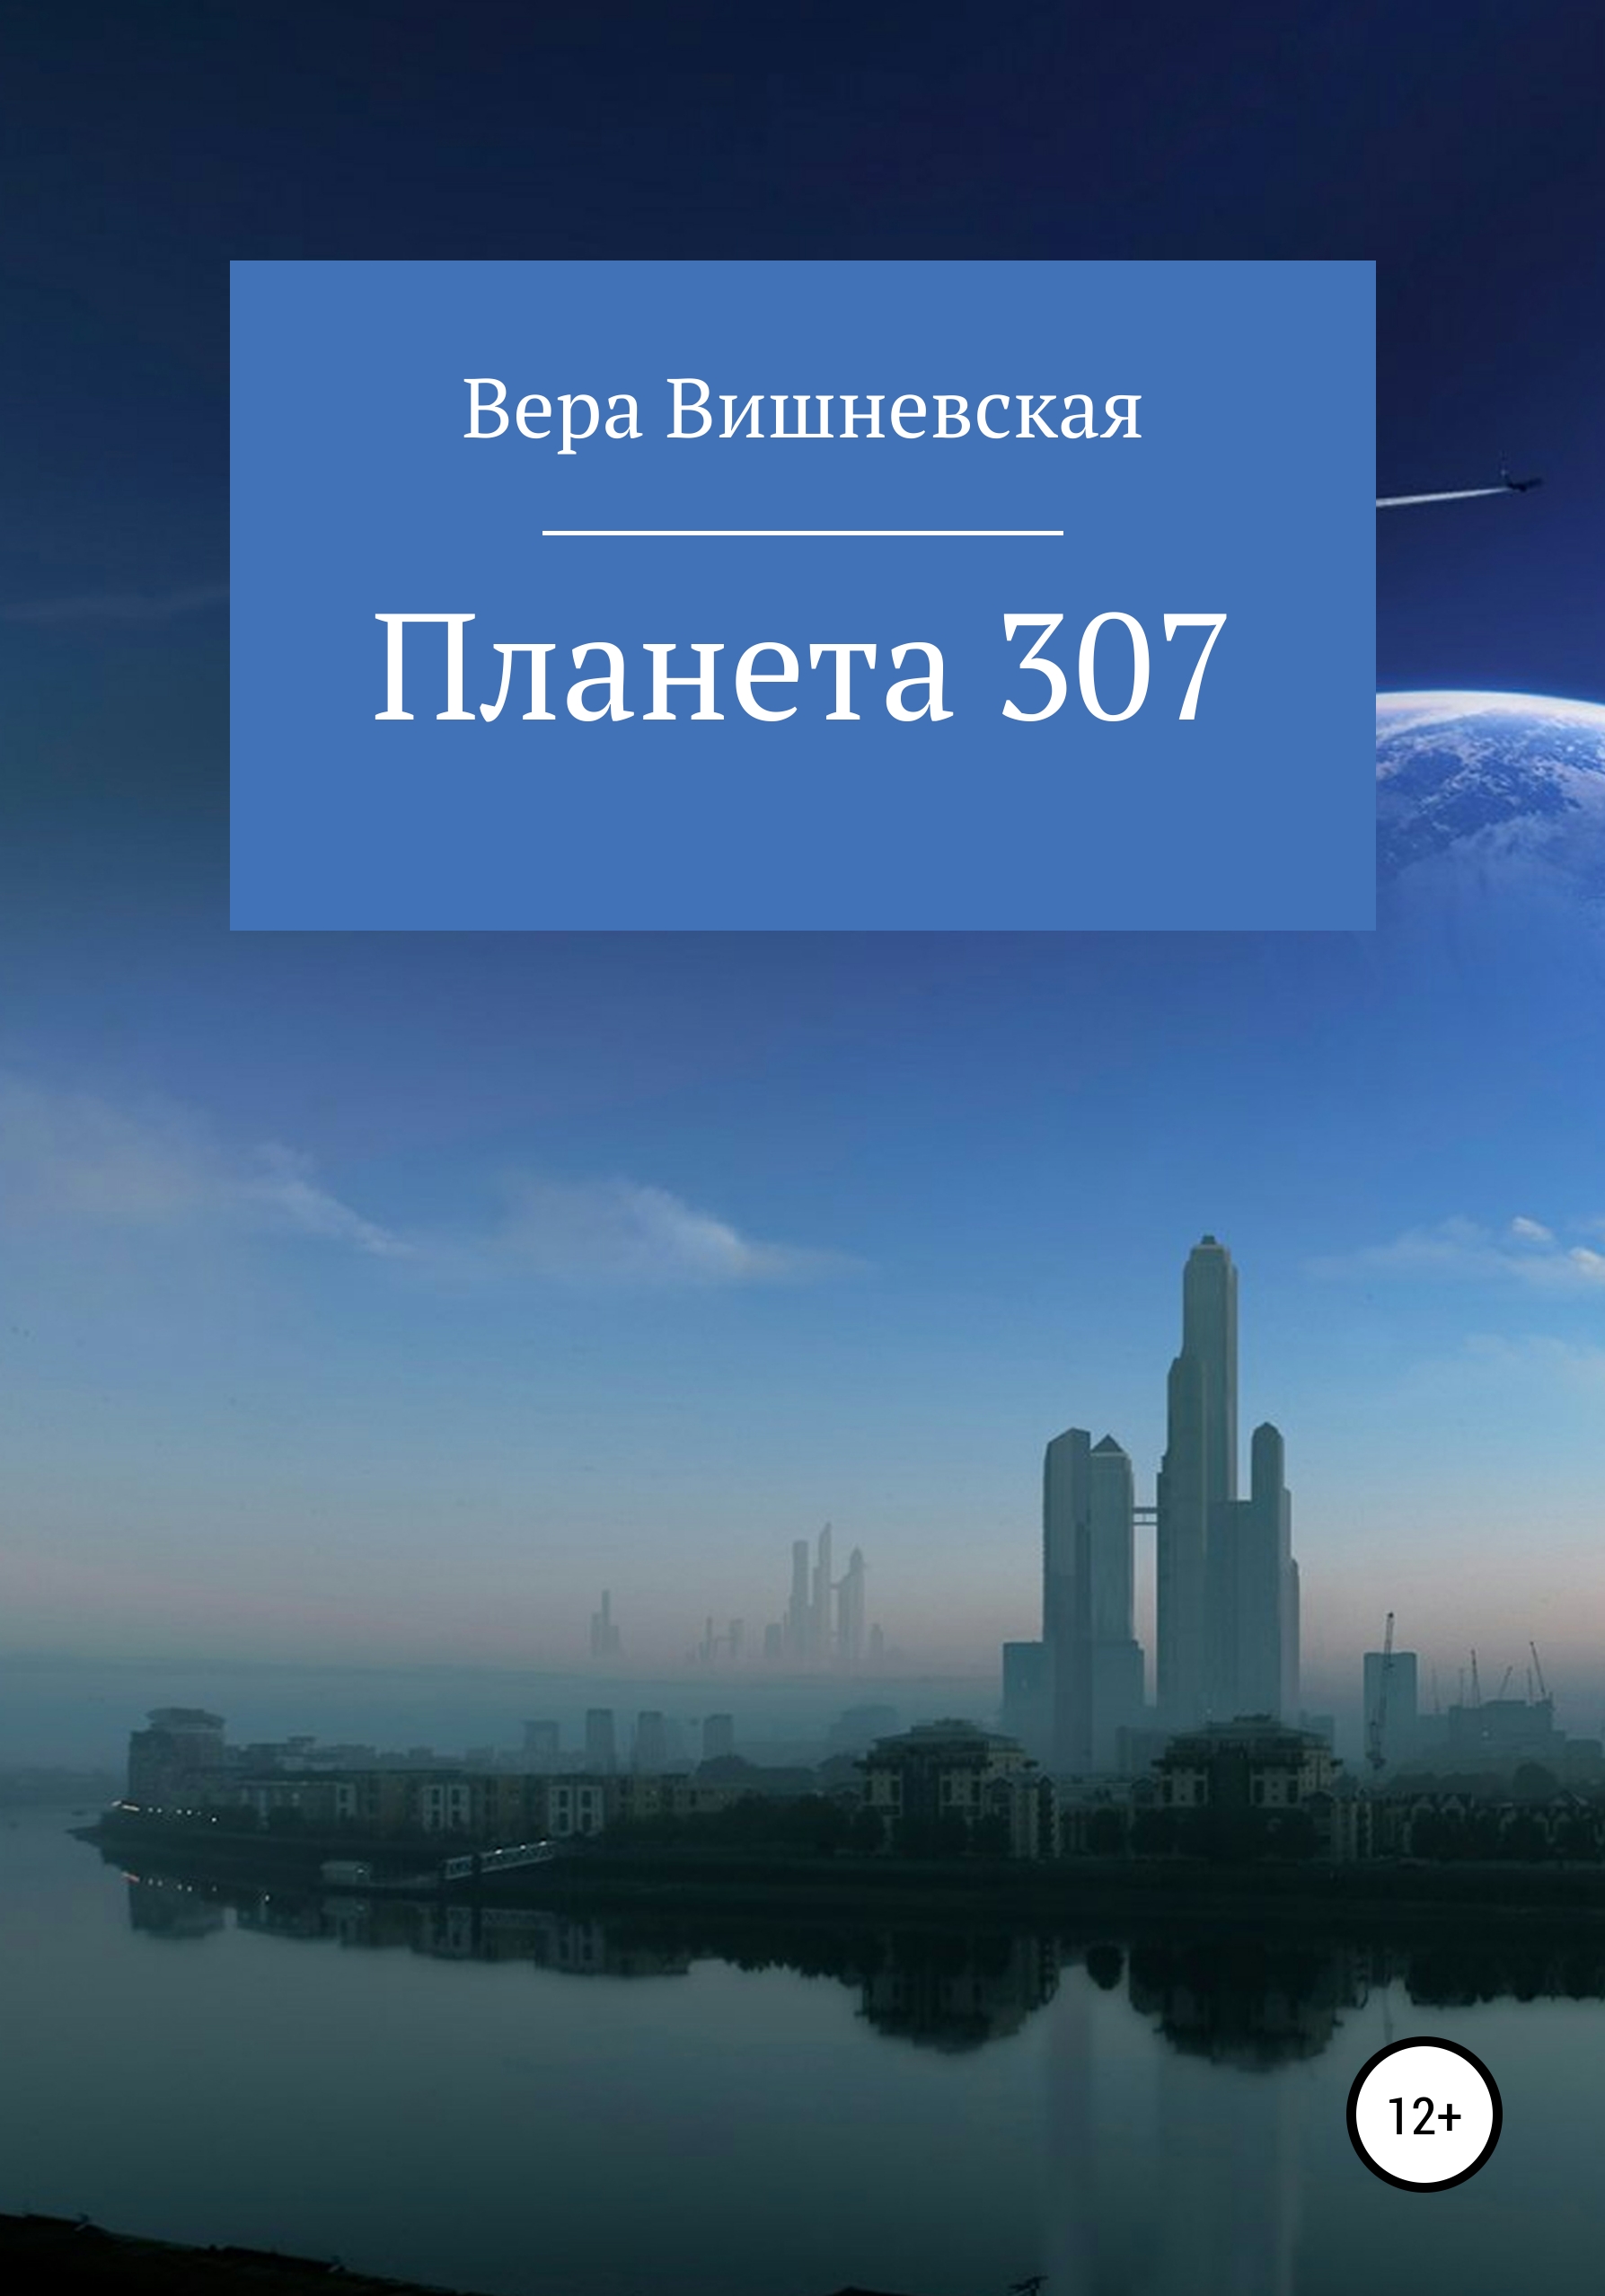 Планета 307 – Вера Михайловна Вишневская